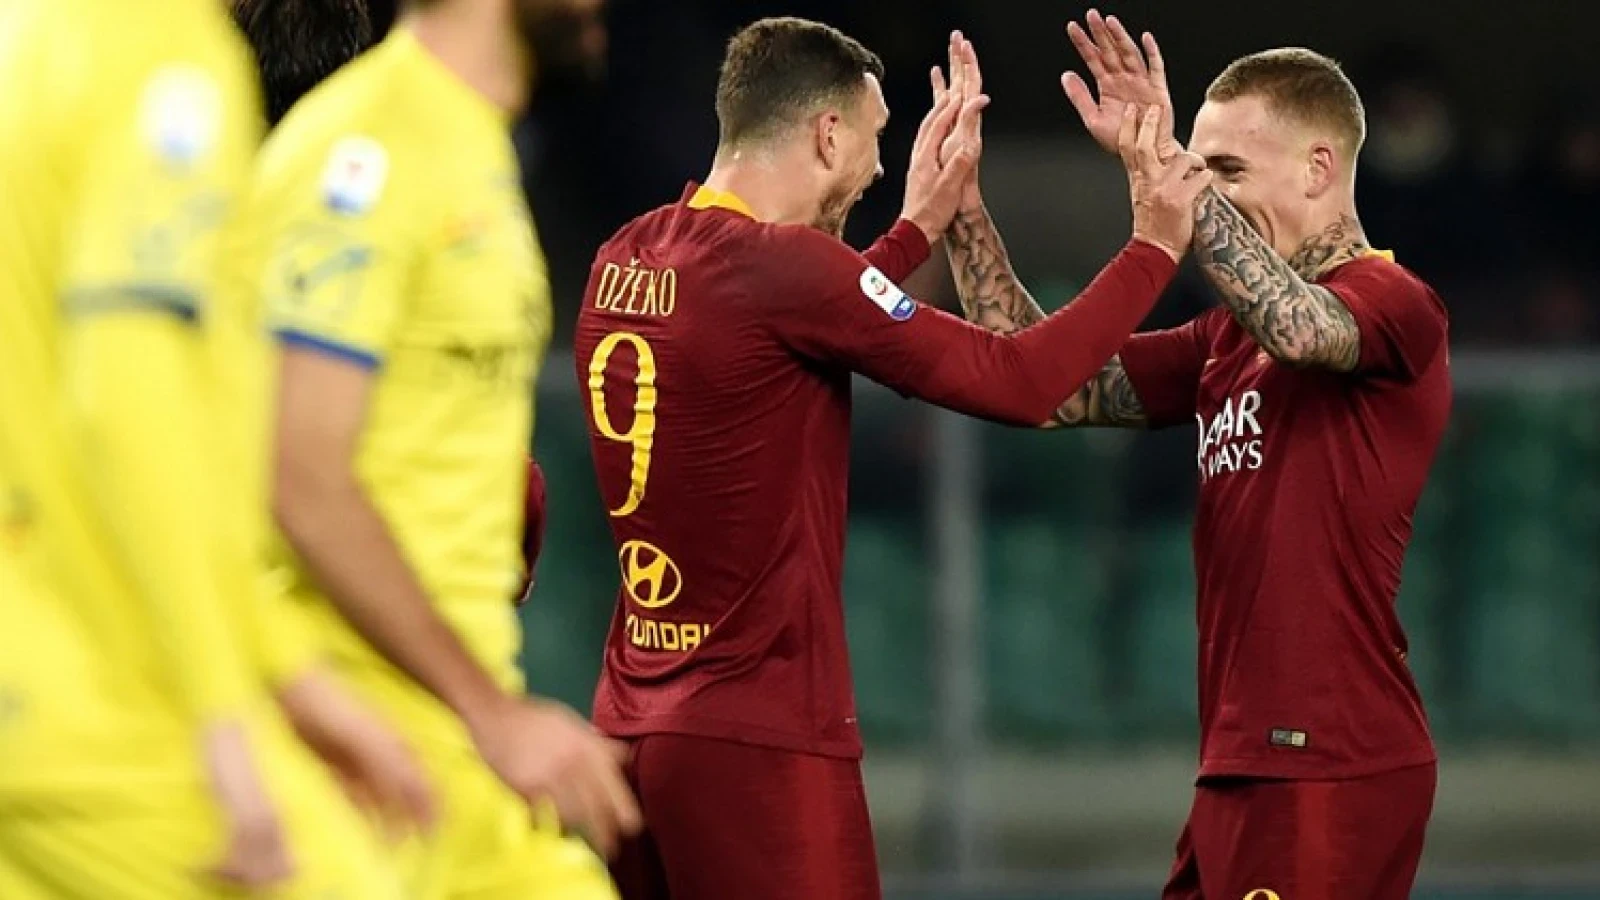 Sterspeler AS Roma haalt uit naar Karsdorp: 'Had dat gezegd toen je nog hier was'